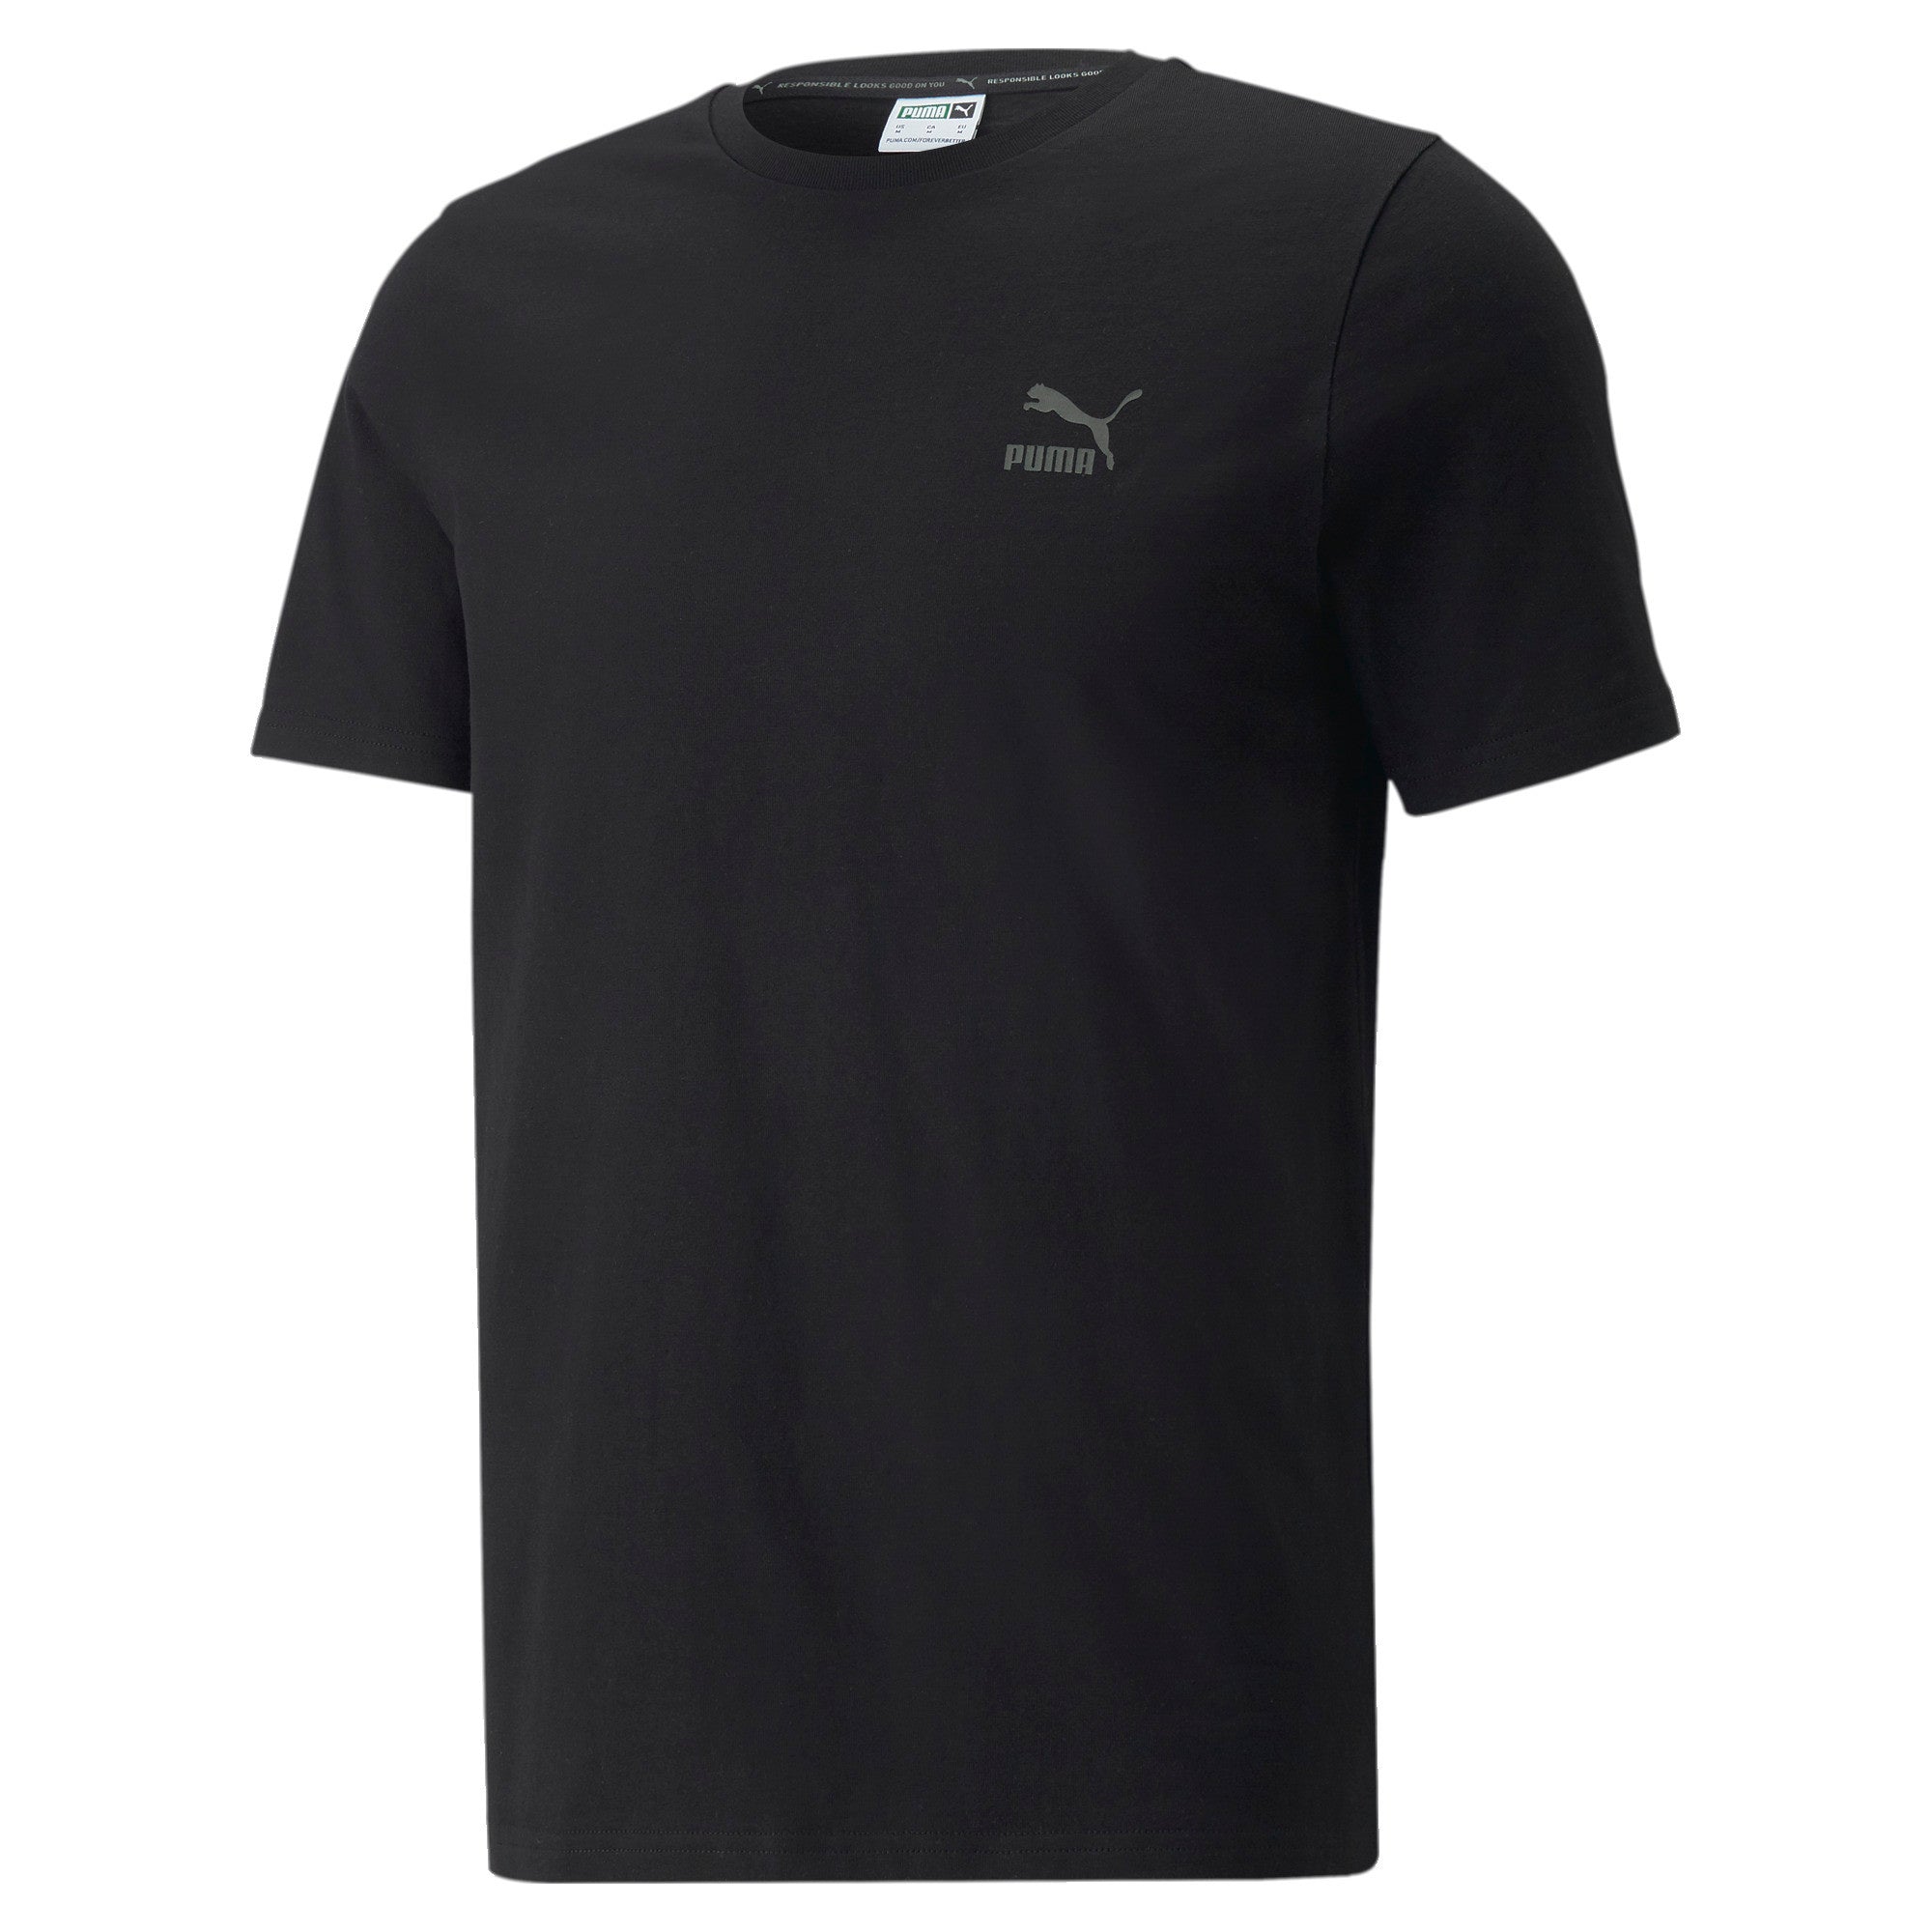 Camiseta Puma - Negro - Camiseta Manga Larga Niño